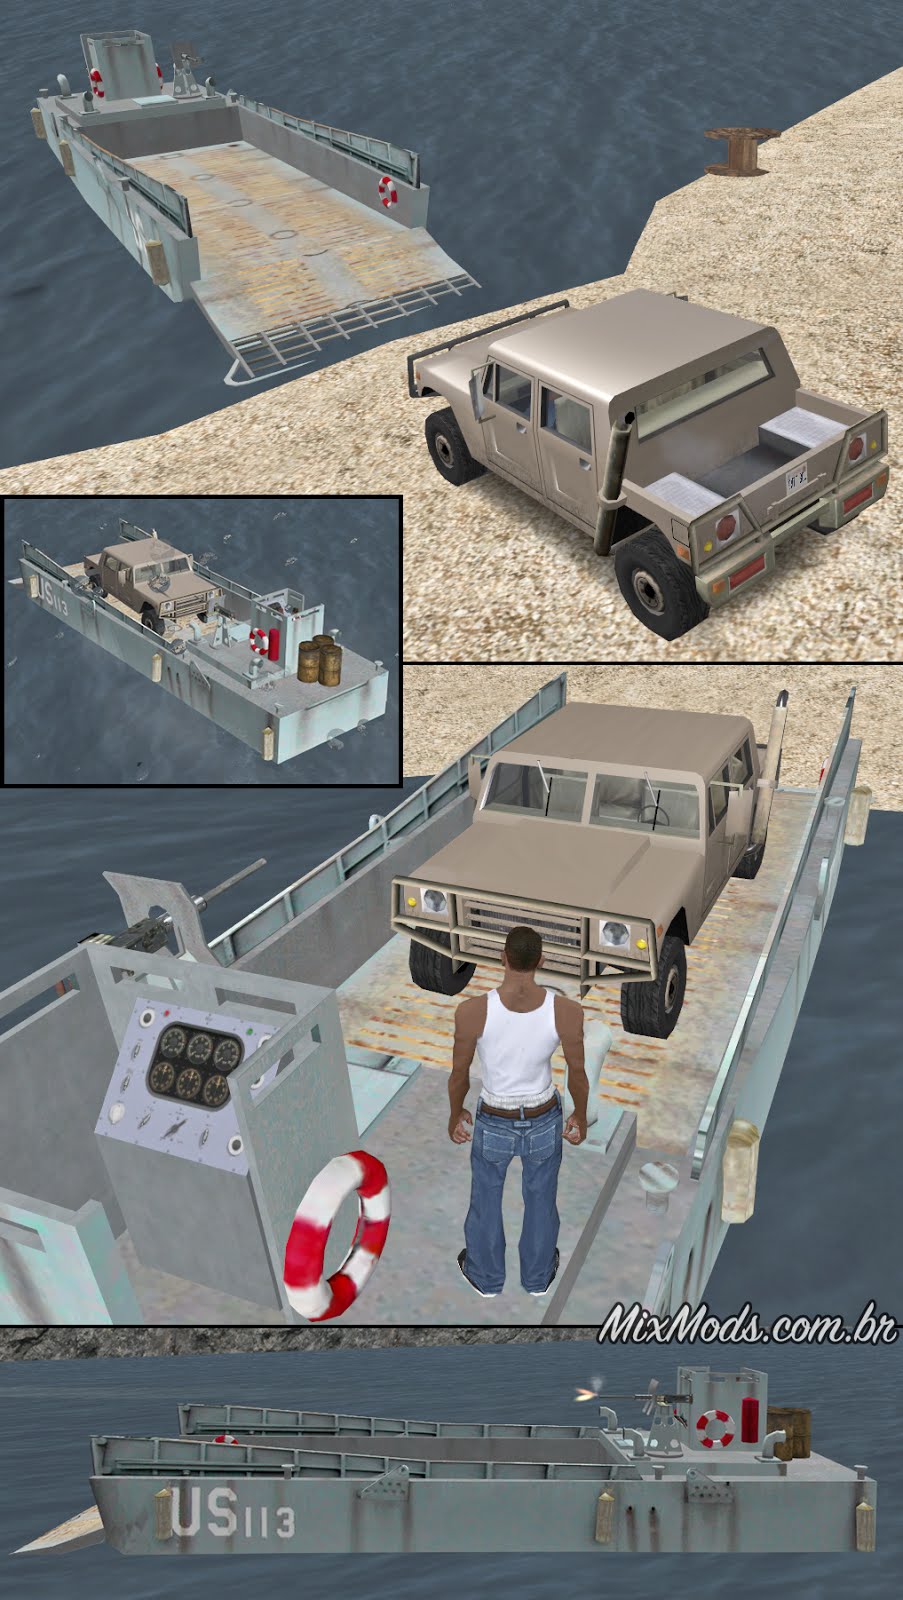 Attach Vehicles to Packer para GTA San Andreas